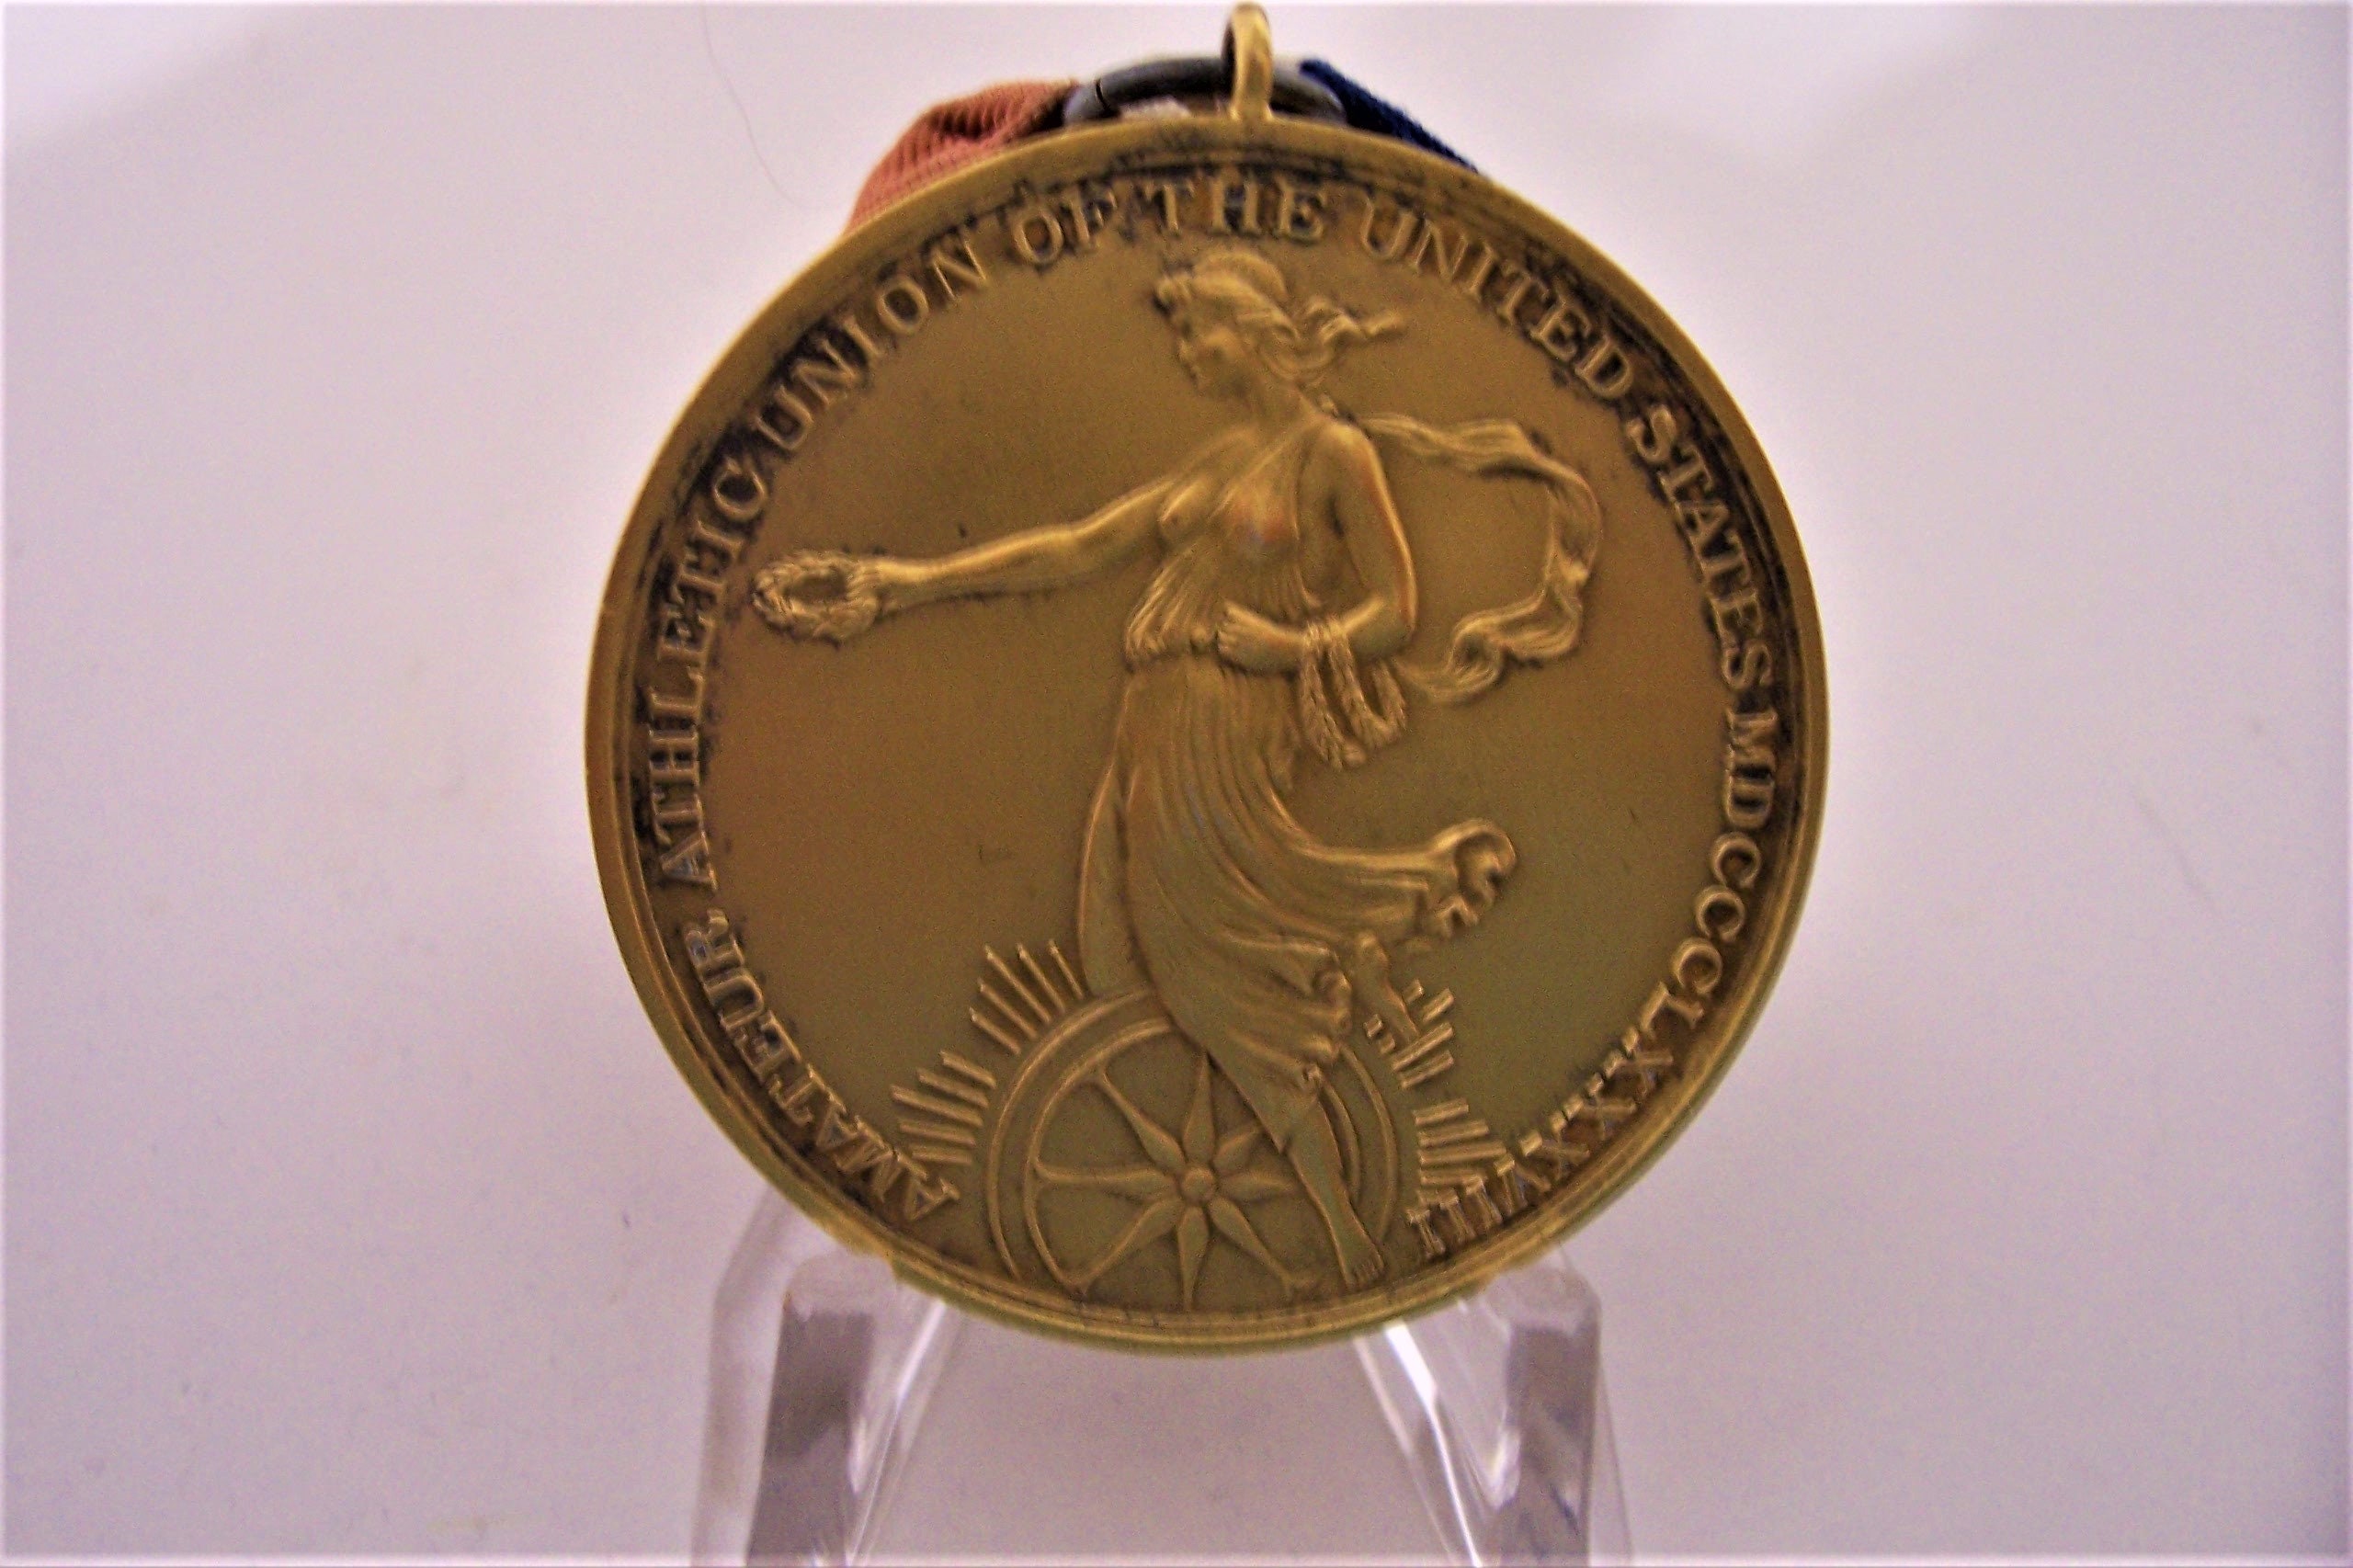 Vintage Sporting Award Medal Dieges Clust Sterling and Gold